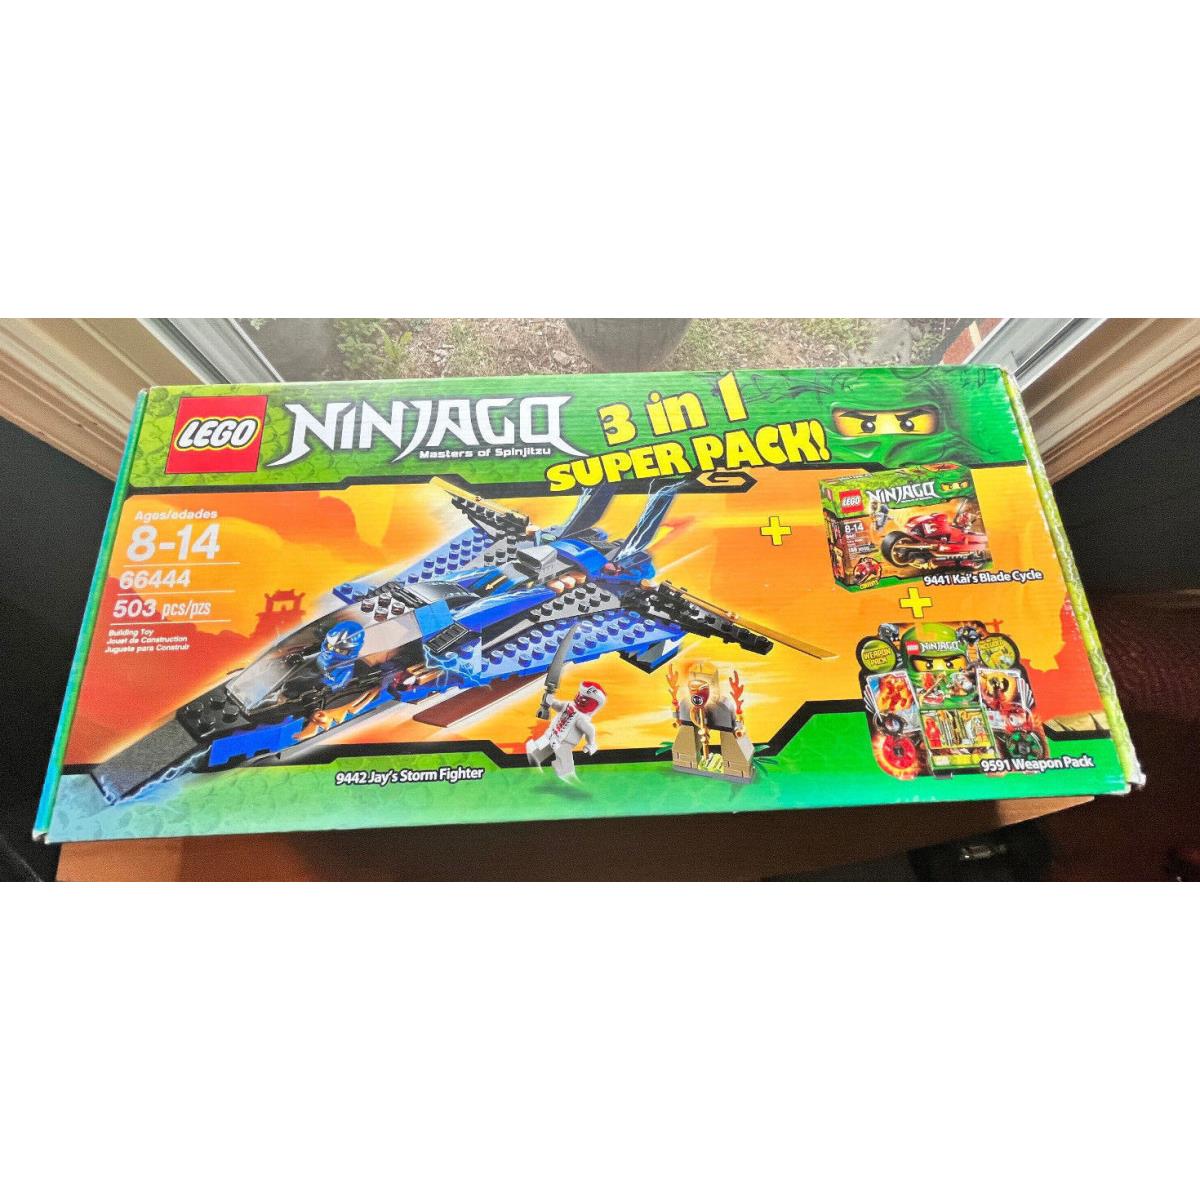 66444 Lego Ninjago Super Pack 3-in-1